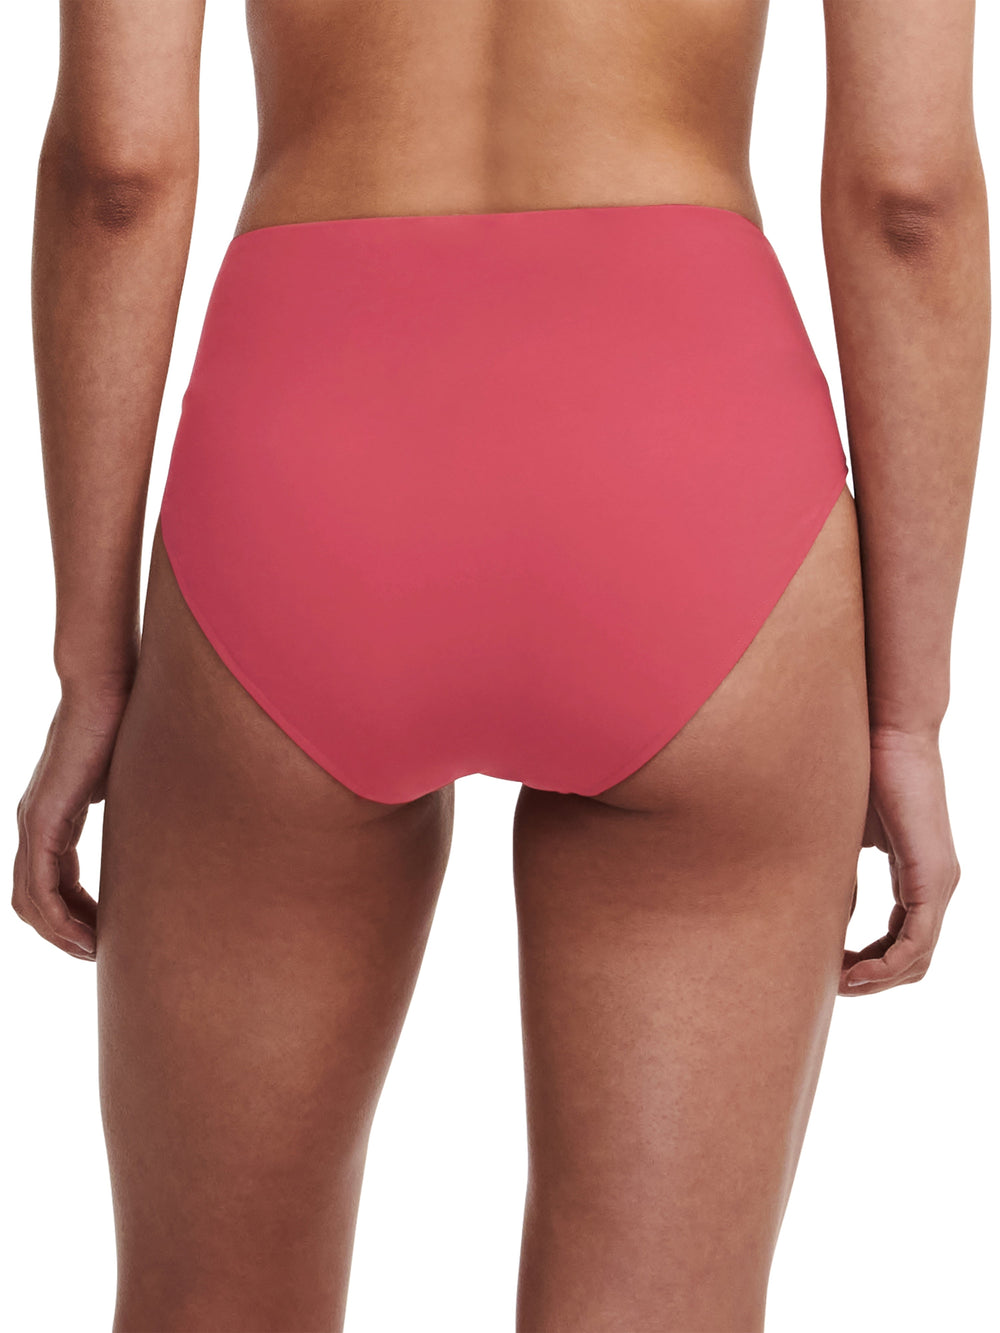 Chantelle Swimwear Inspire Full Brief - Granatroter vollständiger Bikini-Slip Chantelle